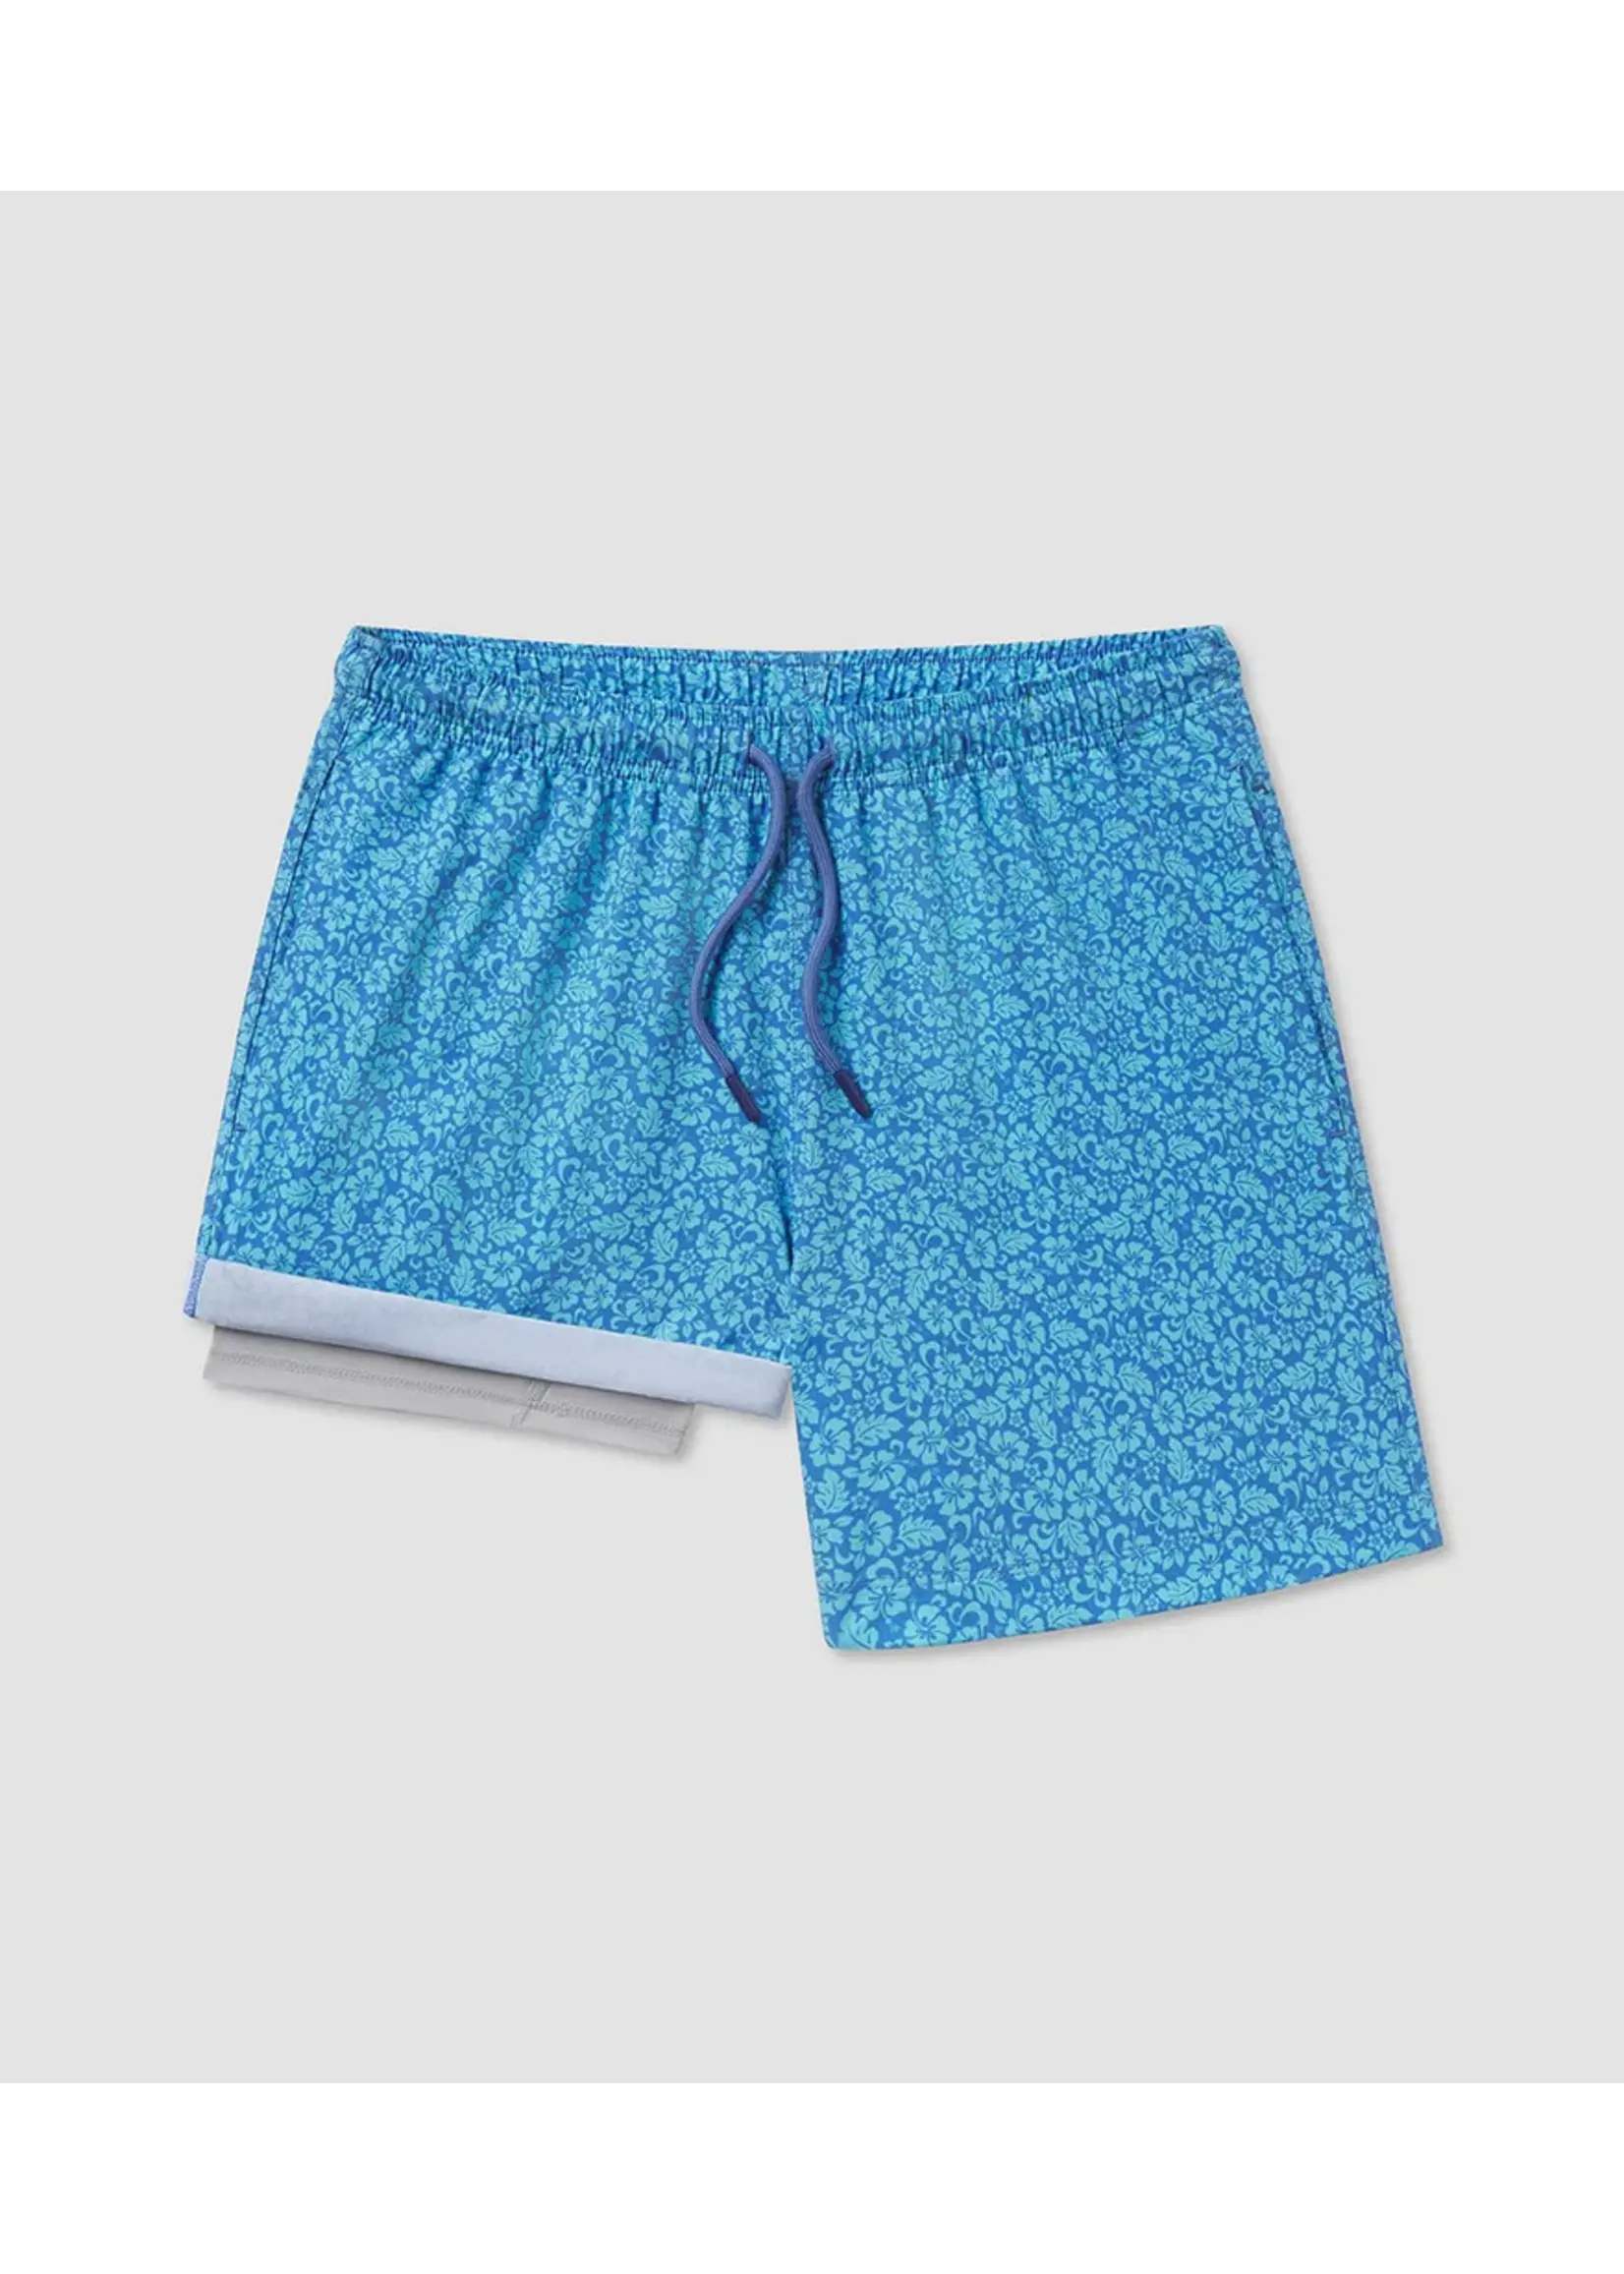 Southern Shirt Boy's Blue Bloom Swim Shorts